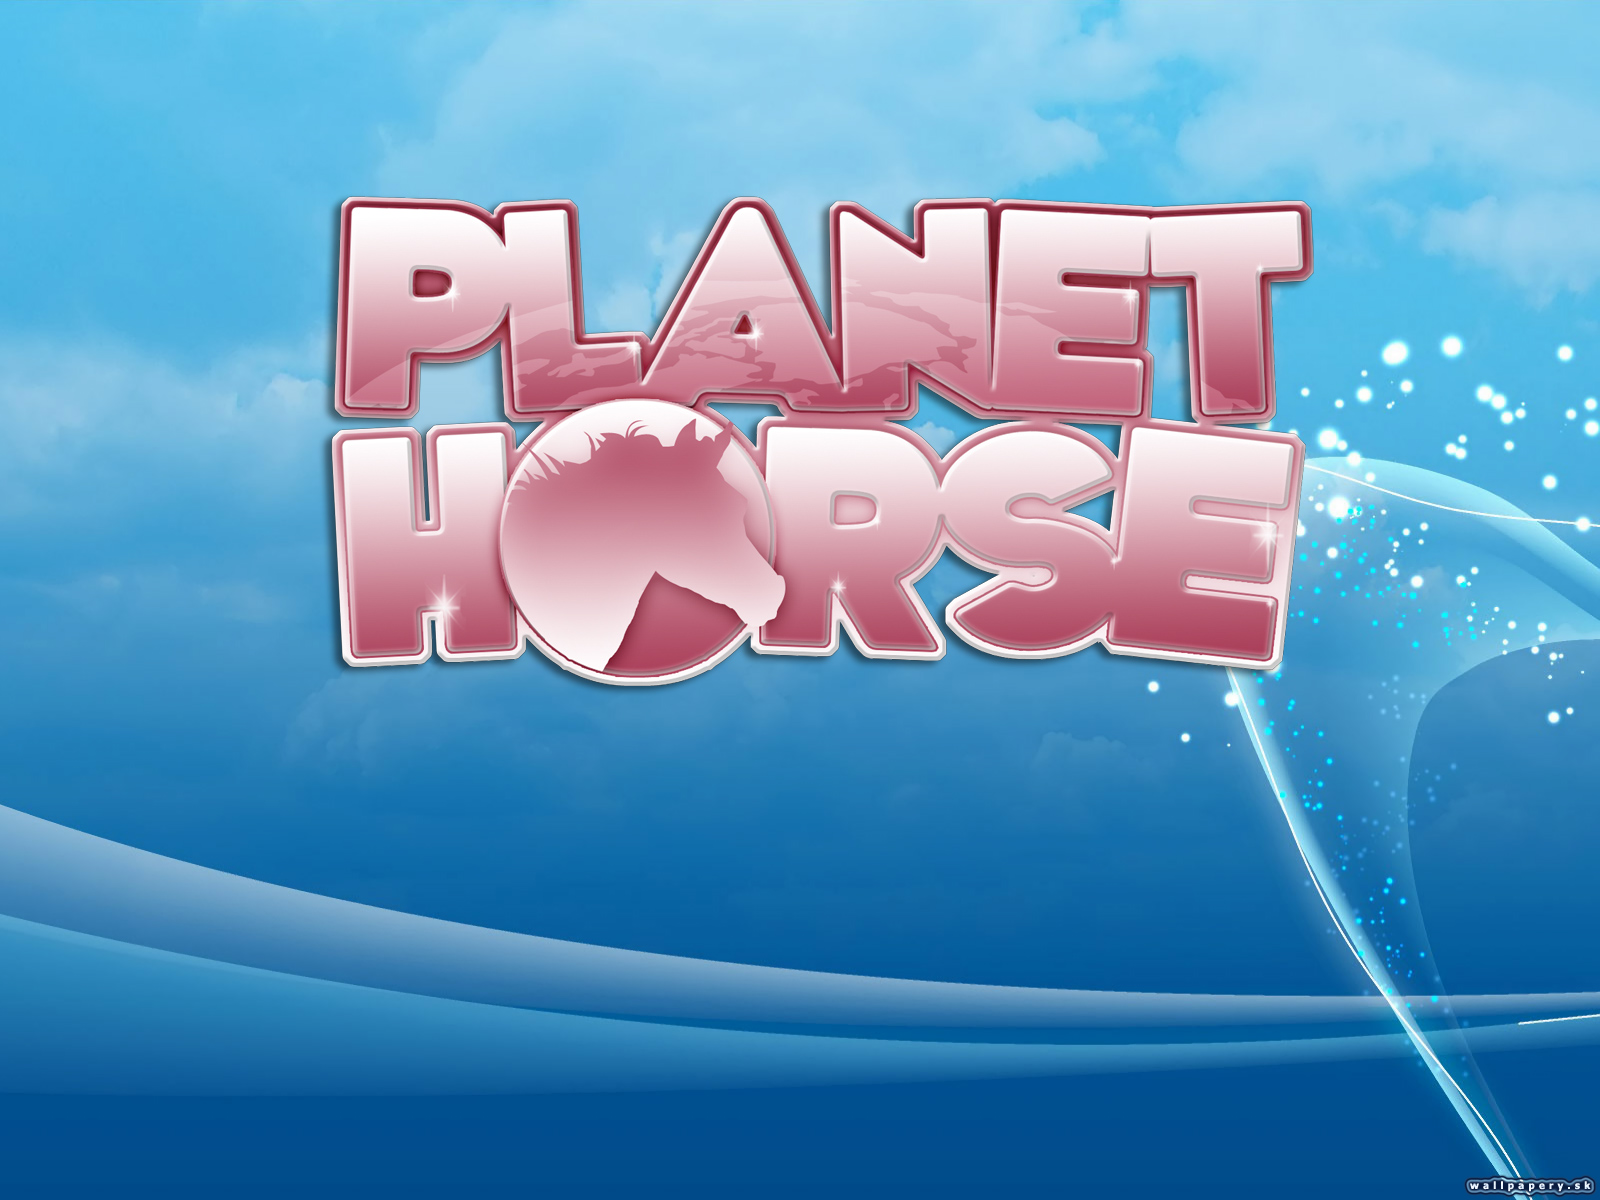 Planet Horse - wallpaper 2